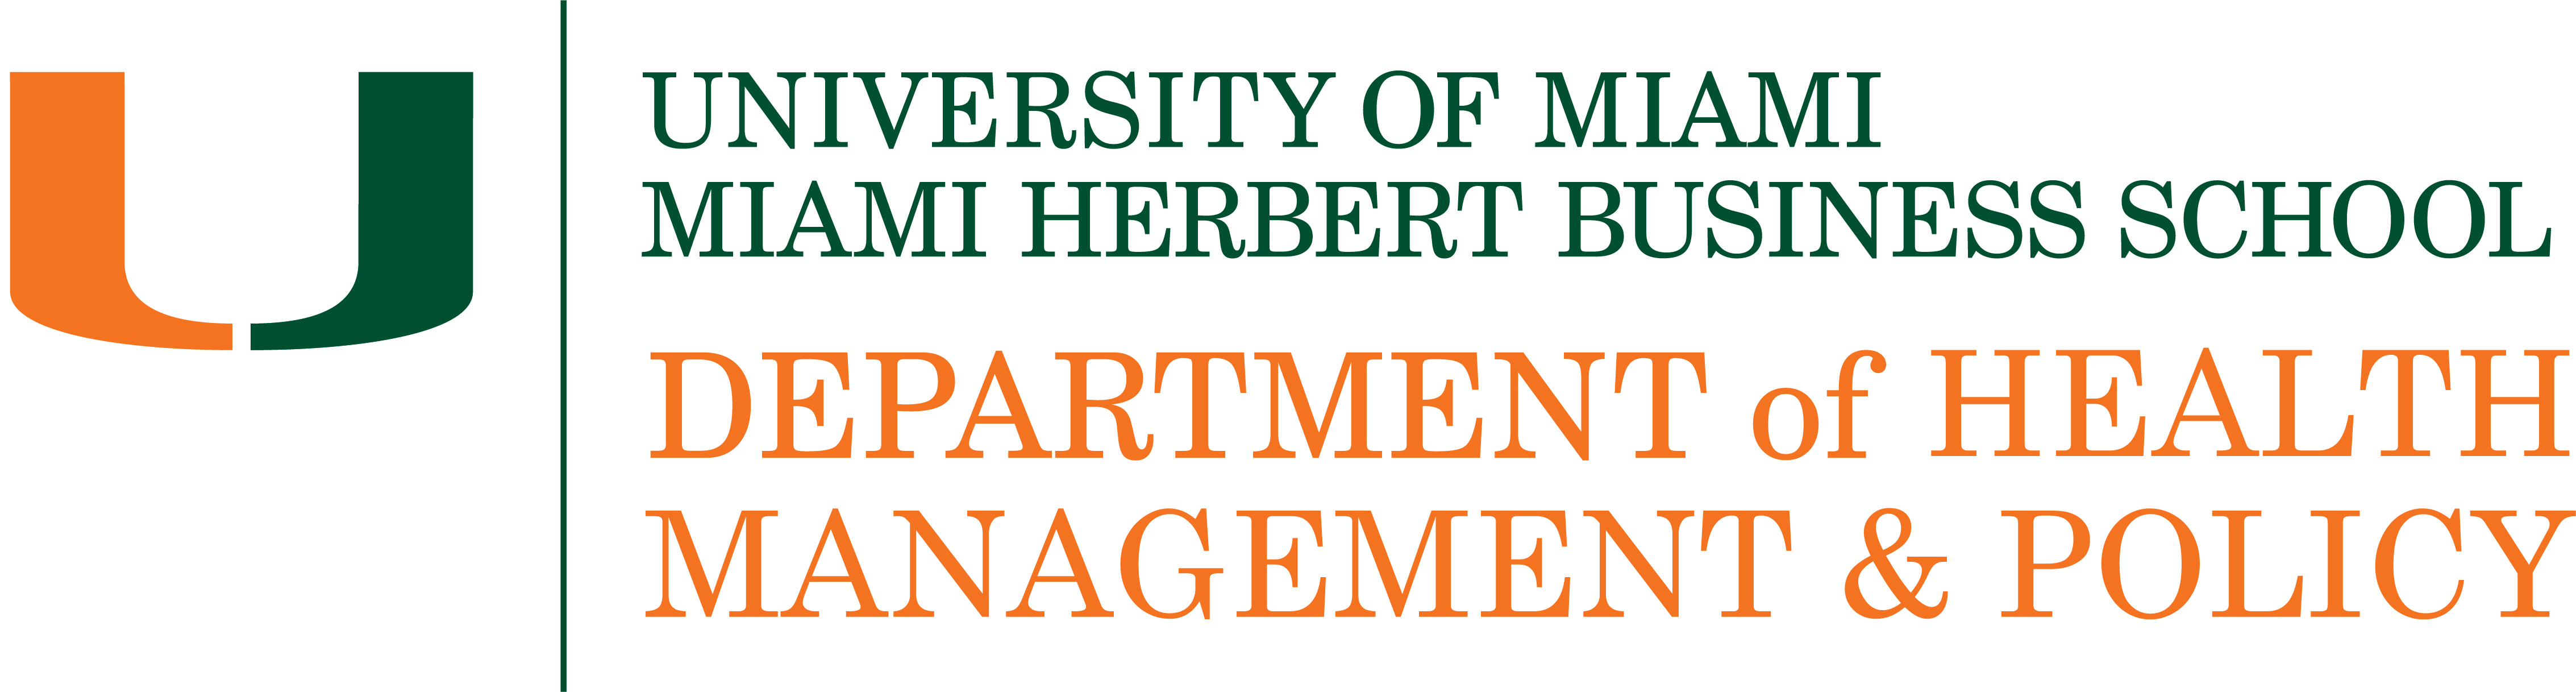 Miami_University_business_school_logo